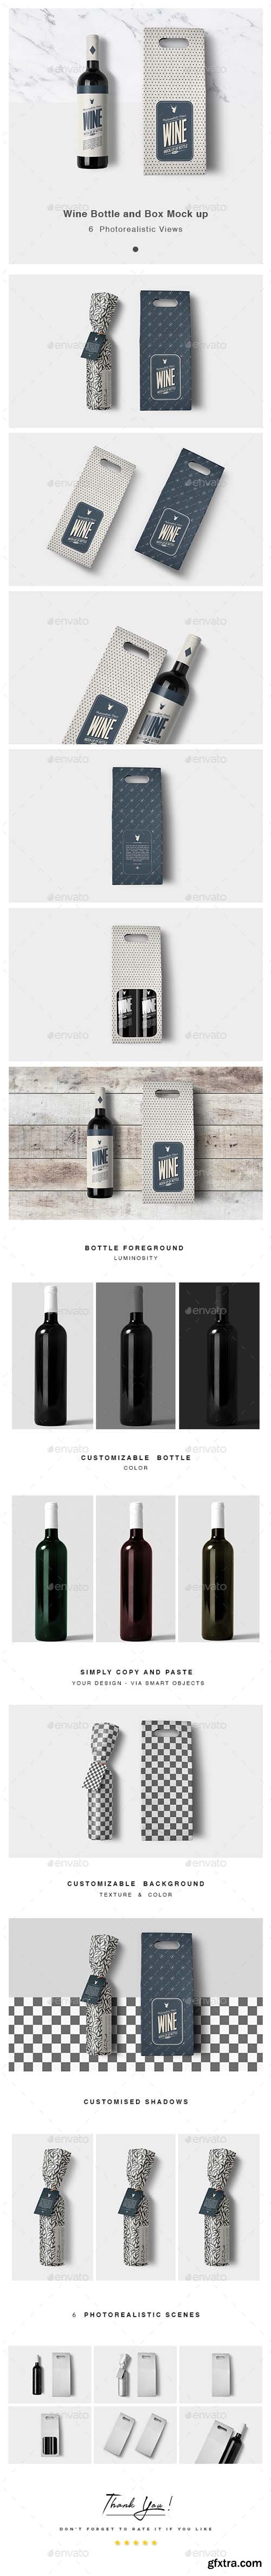 GR - Wine Bottle and Box Mock up 19863778